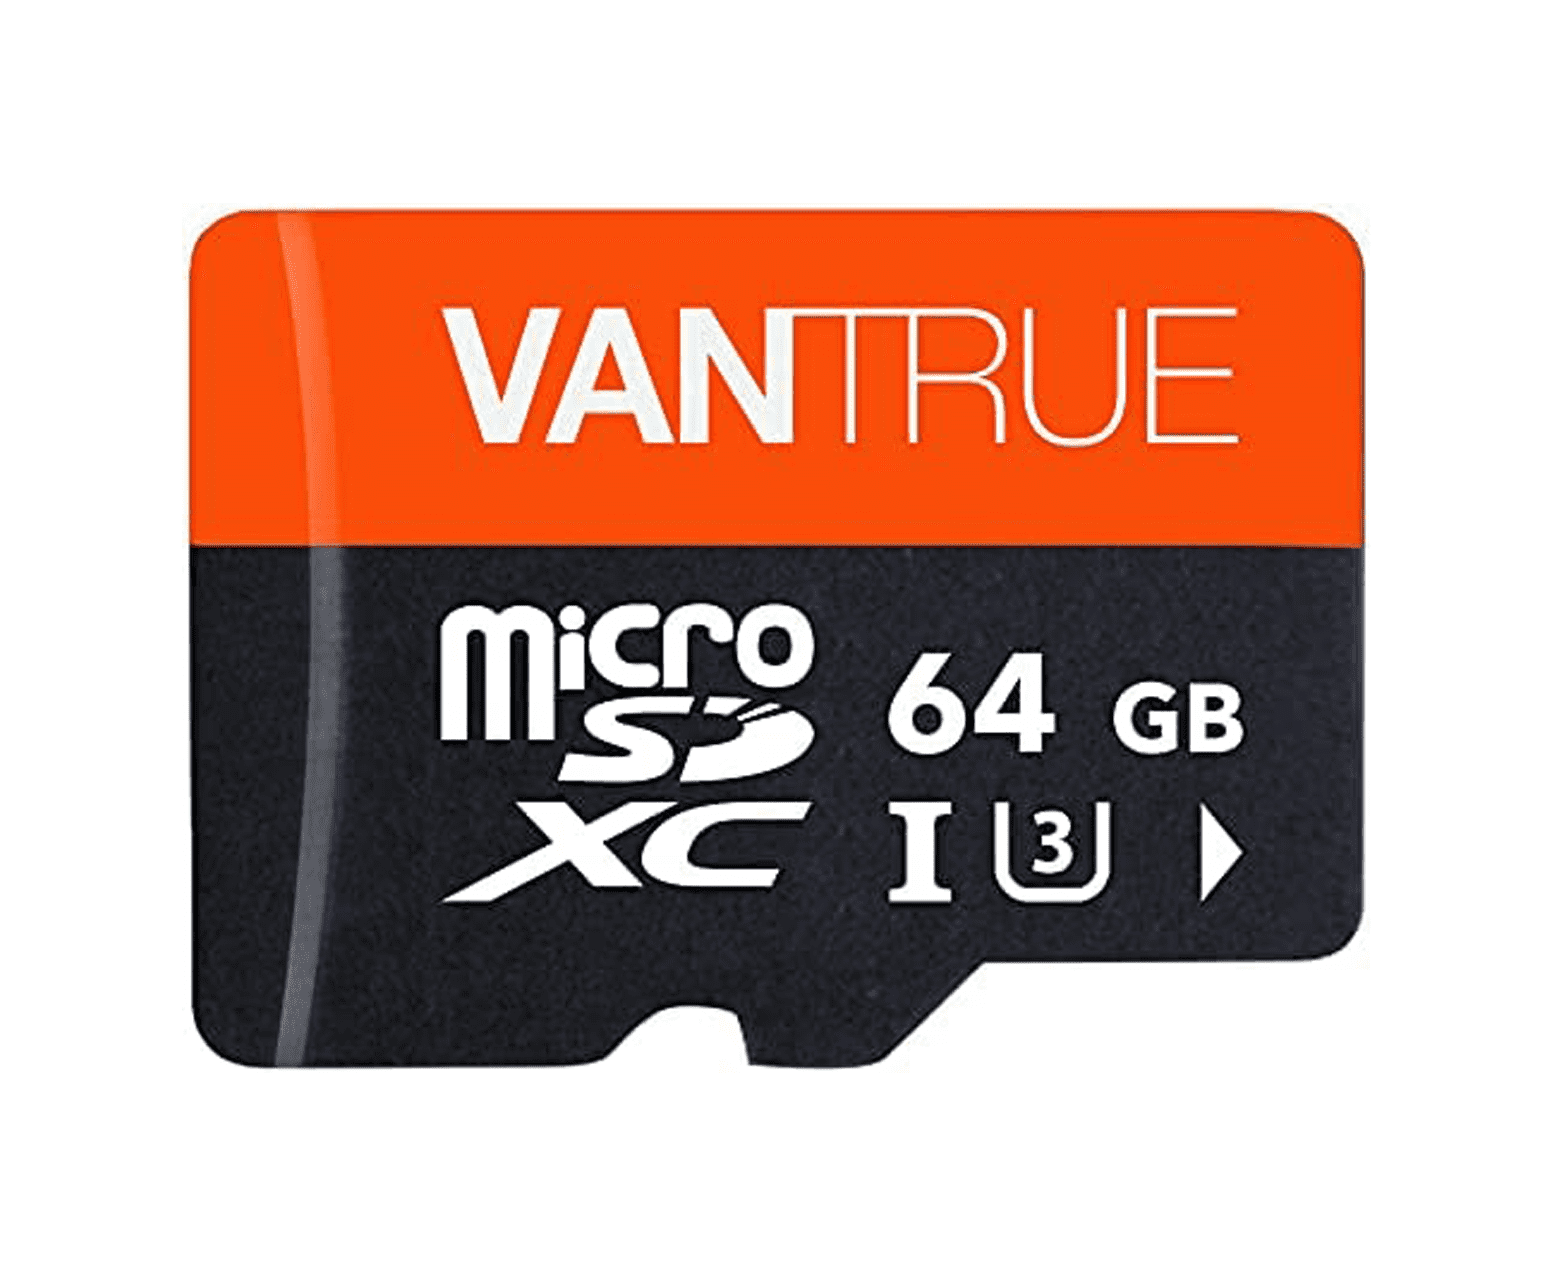 Vantrue 064 GB SD Kart